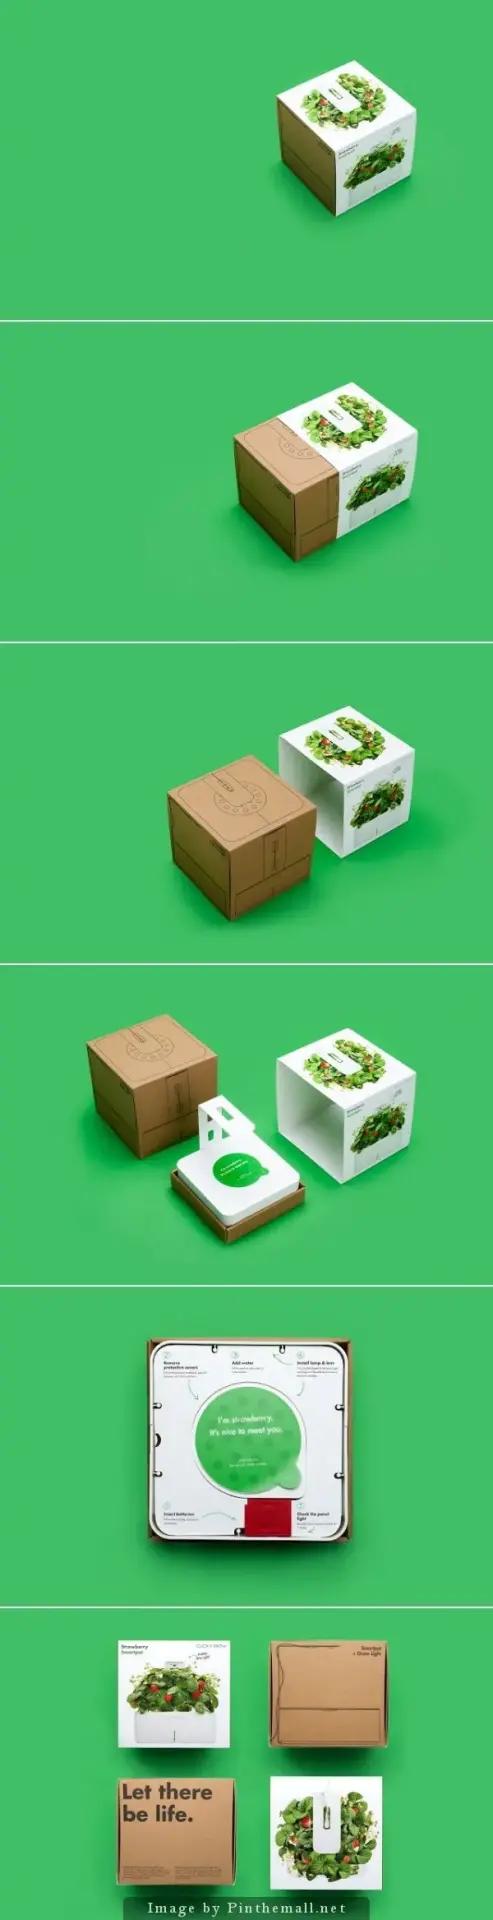 Packaging design20